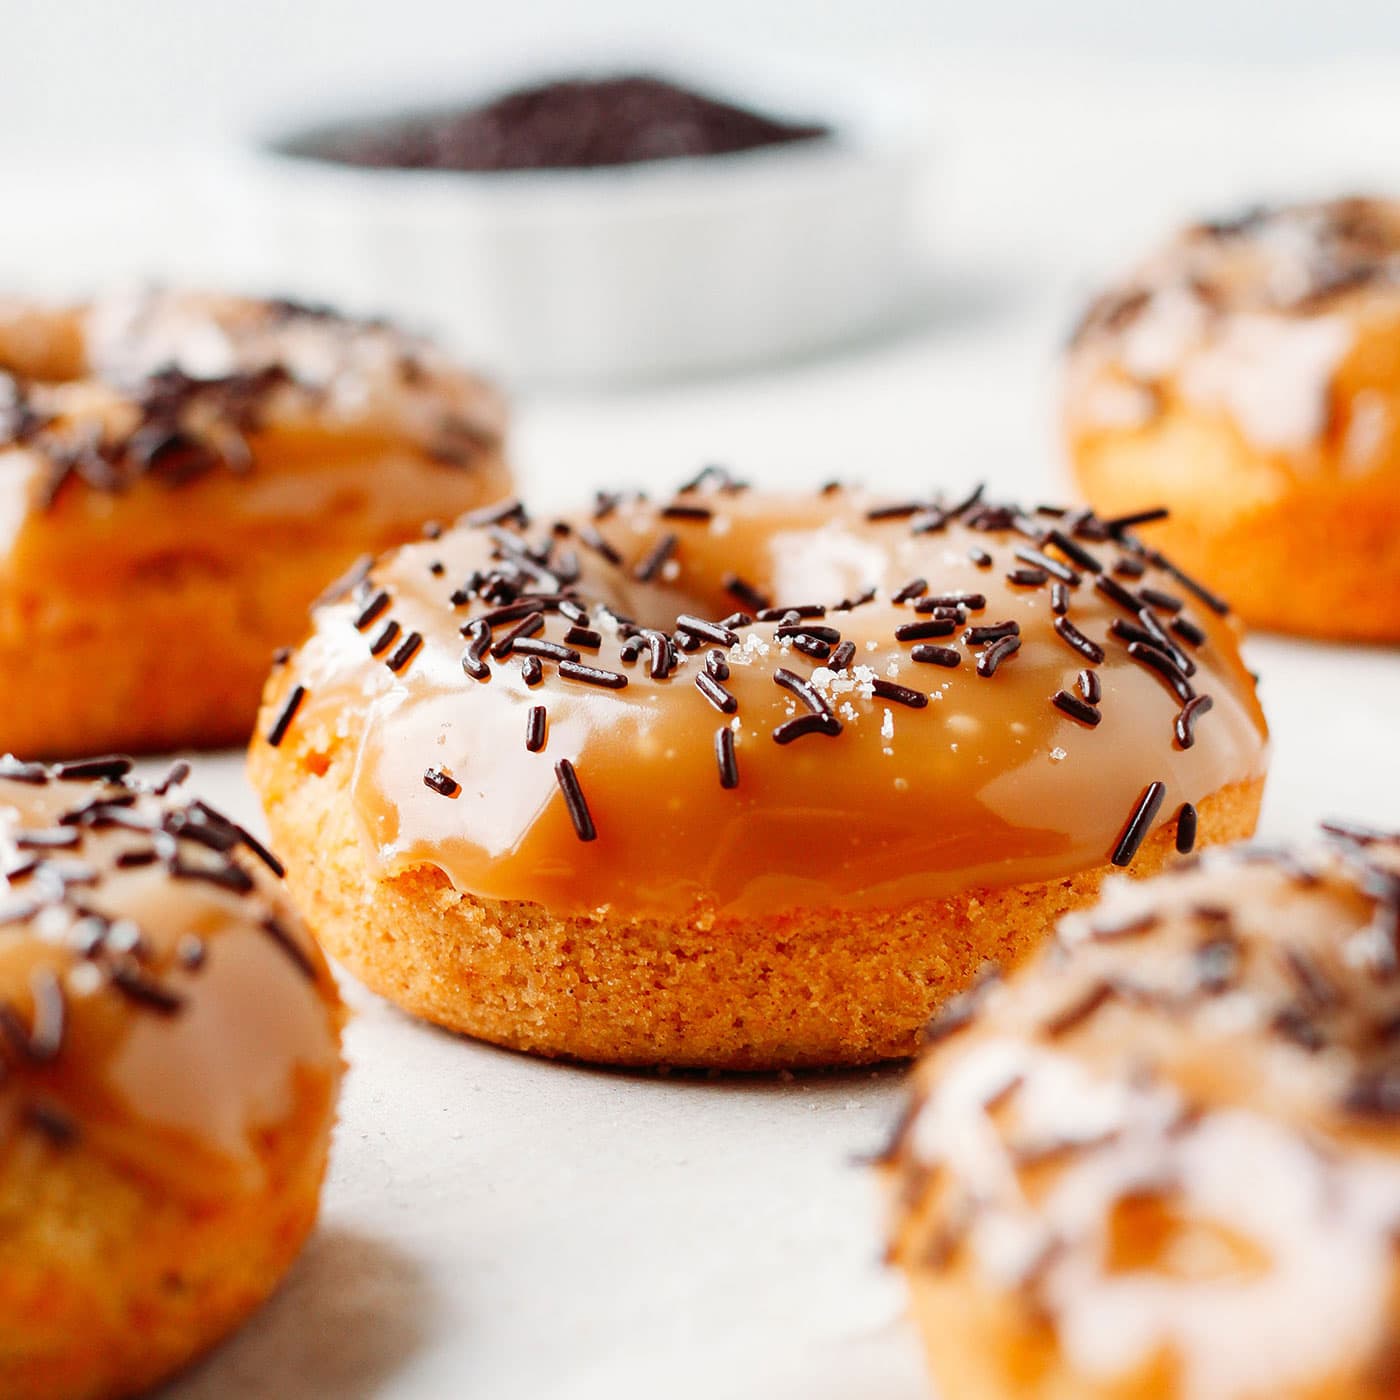 Vegan Baked Orange Donuts with Salted Caramel Glaze